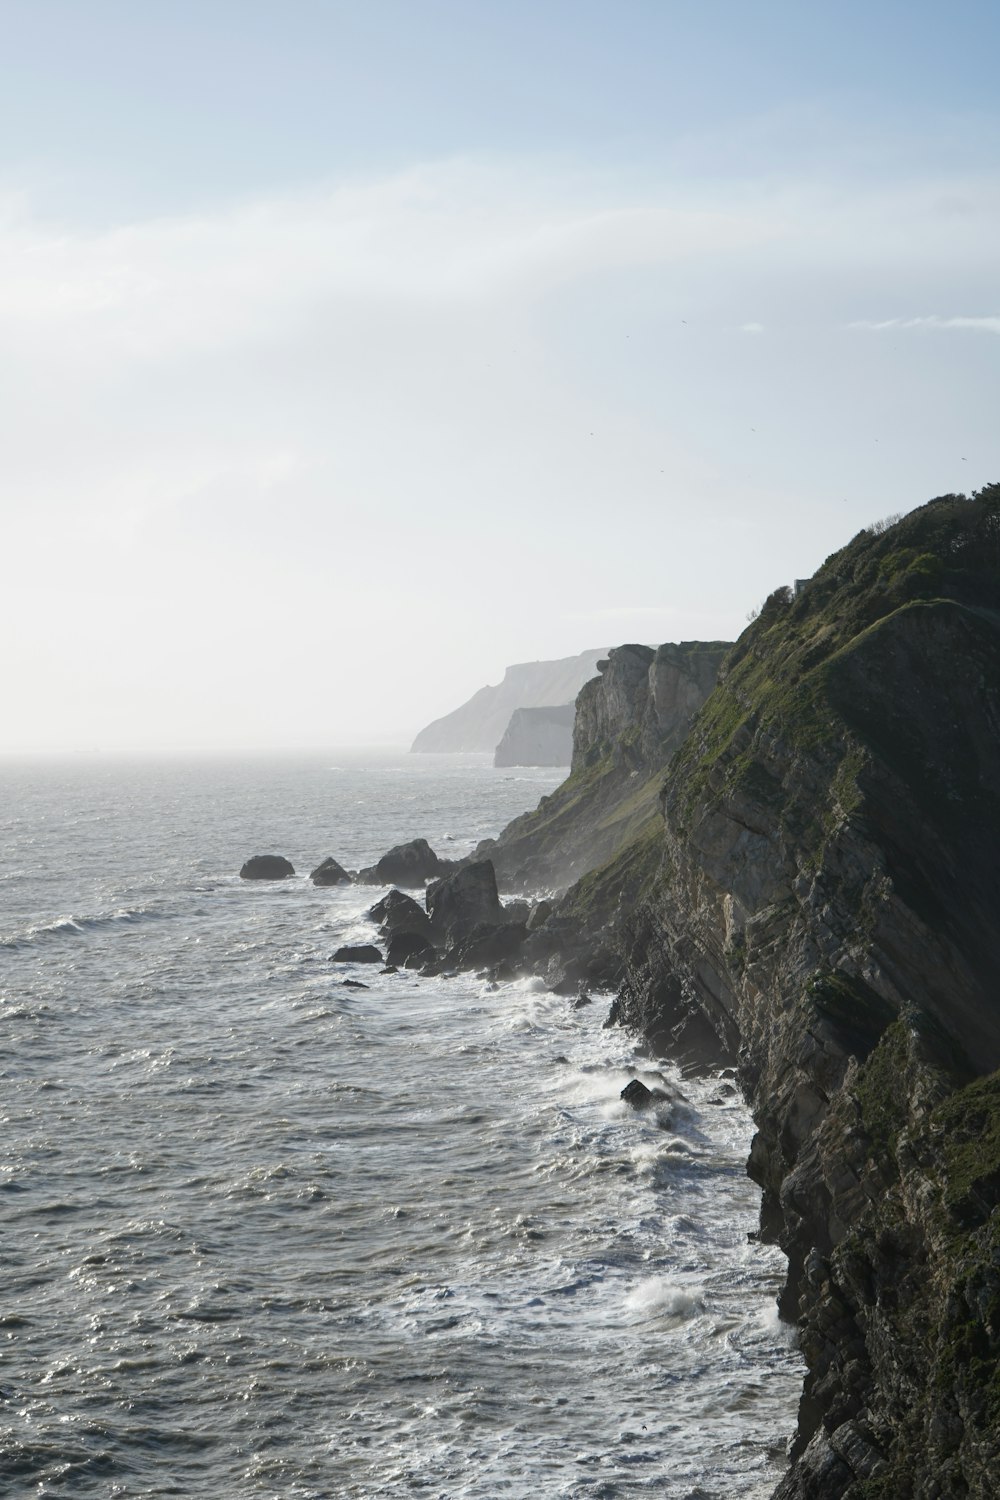 a rocky cliff overlooks the ocean on a foggy day